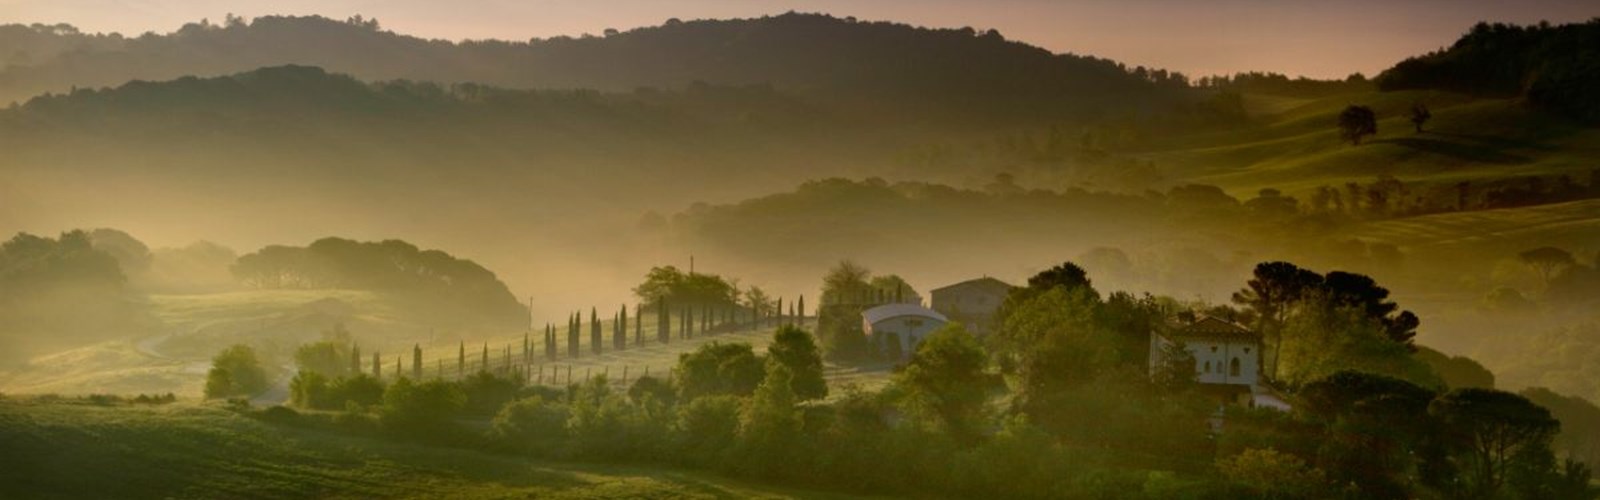 Landskab i Toscana i Italien